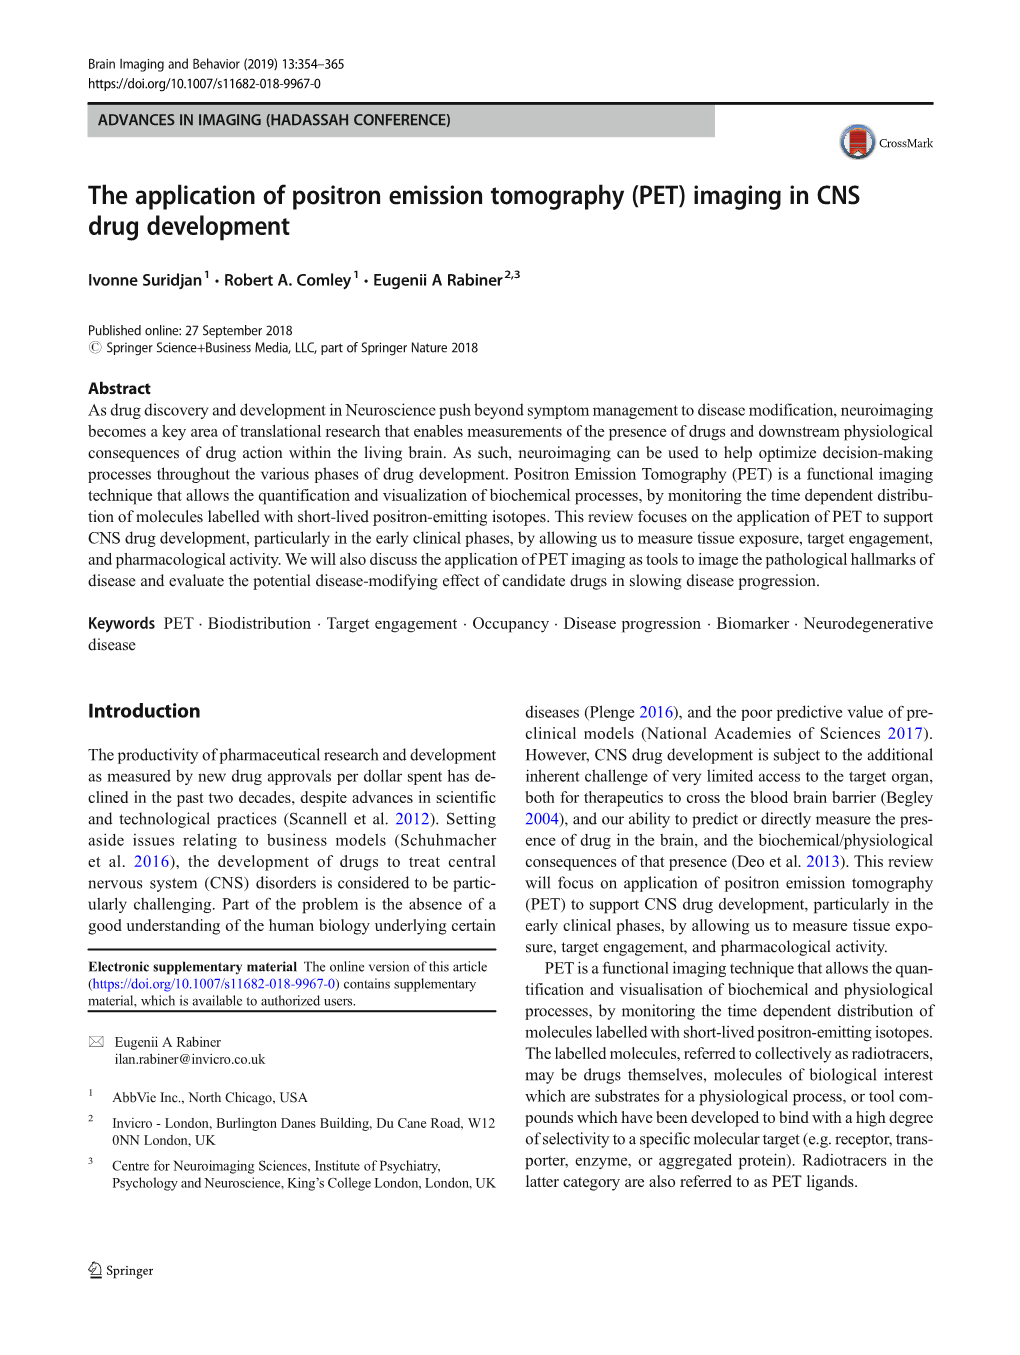 The Application of Positron Emission Tomography (PET) Imaging in CNS Drug Development